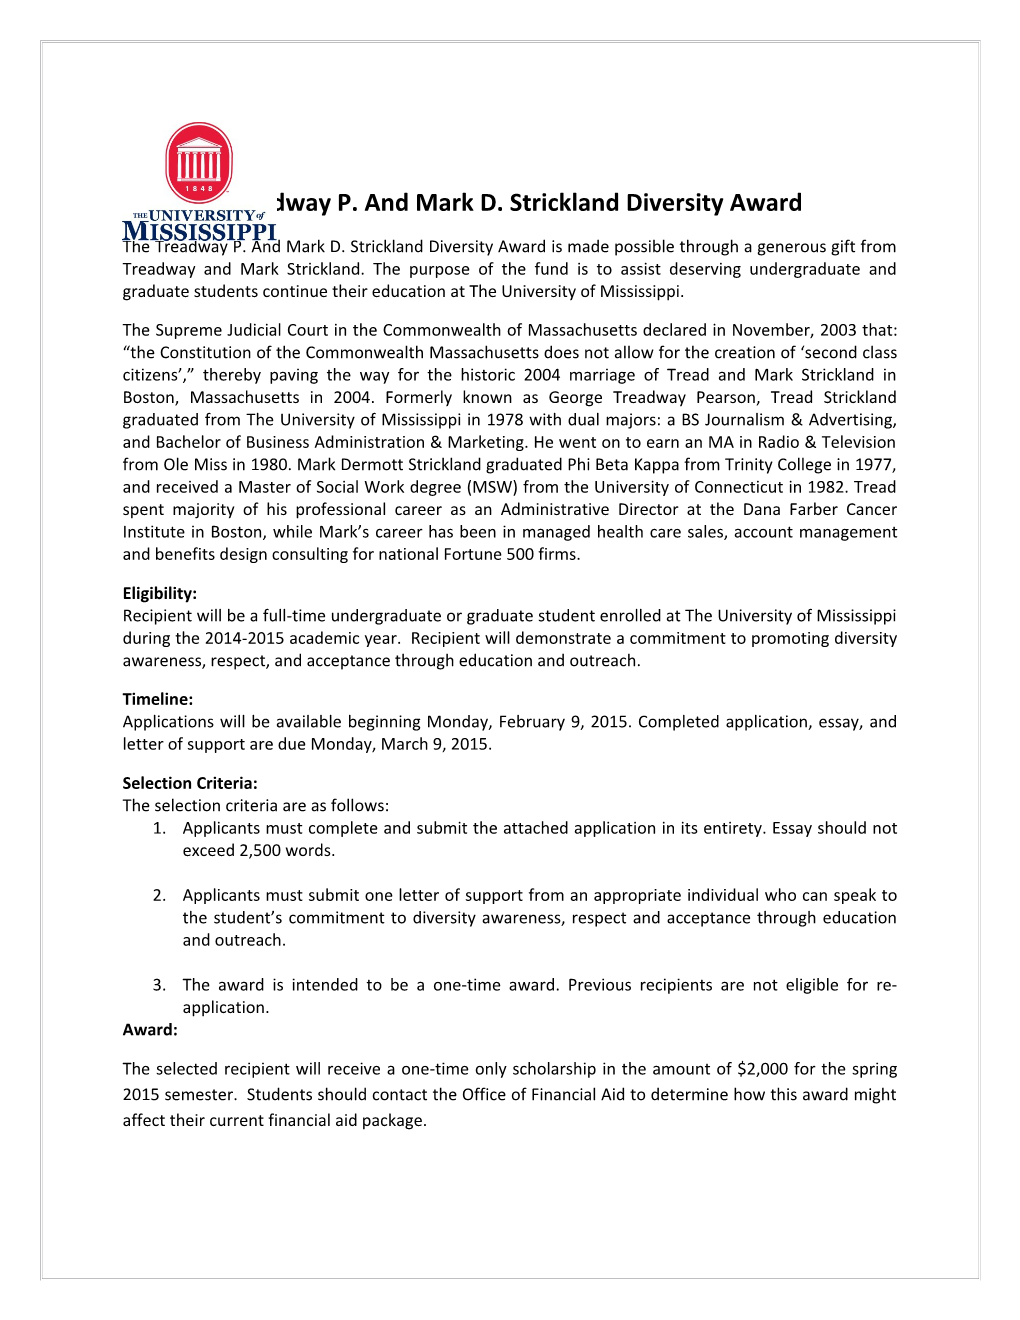 Treadway P. and Mark D. Strickland Diversity Award